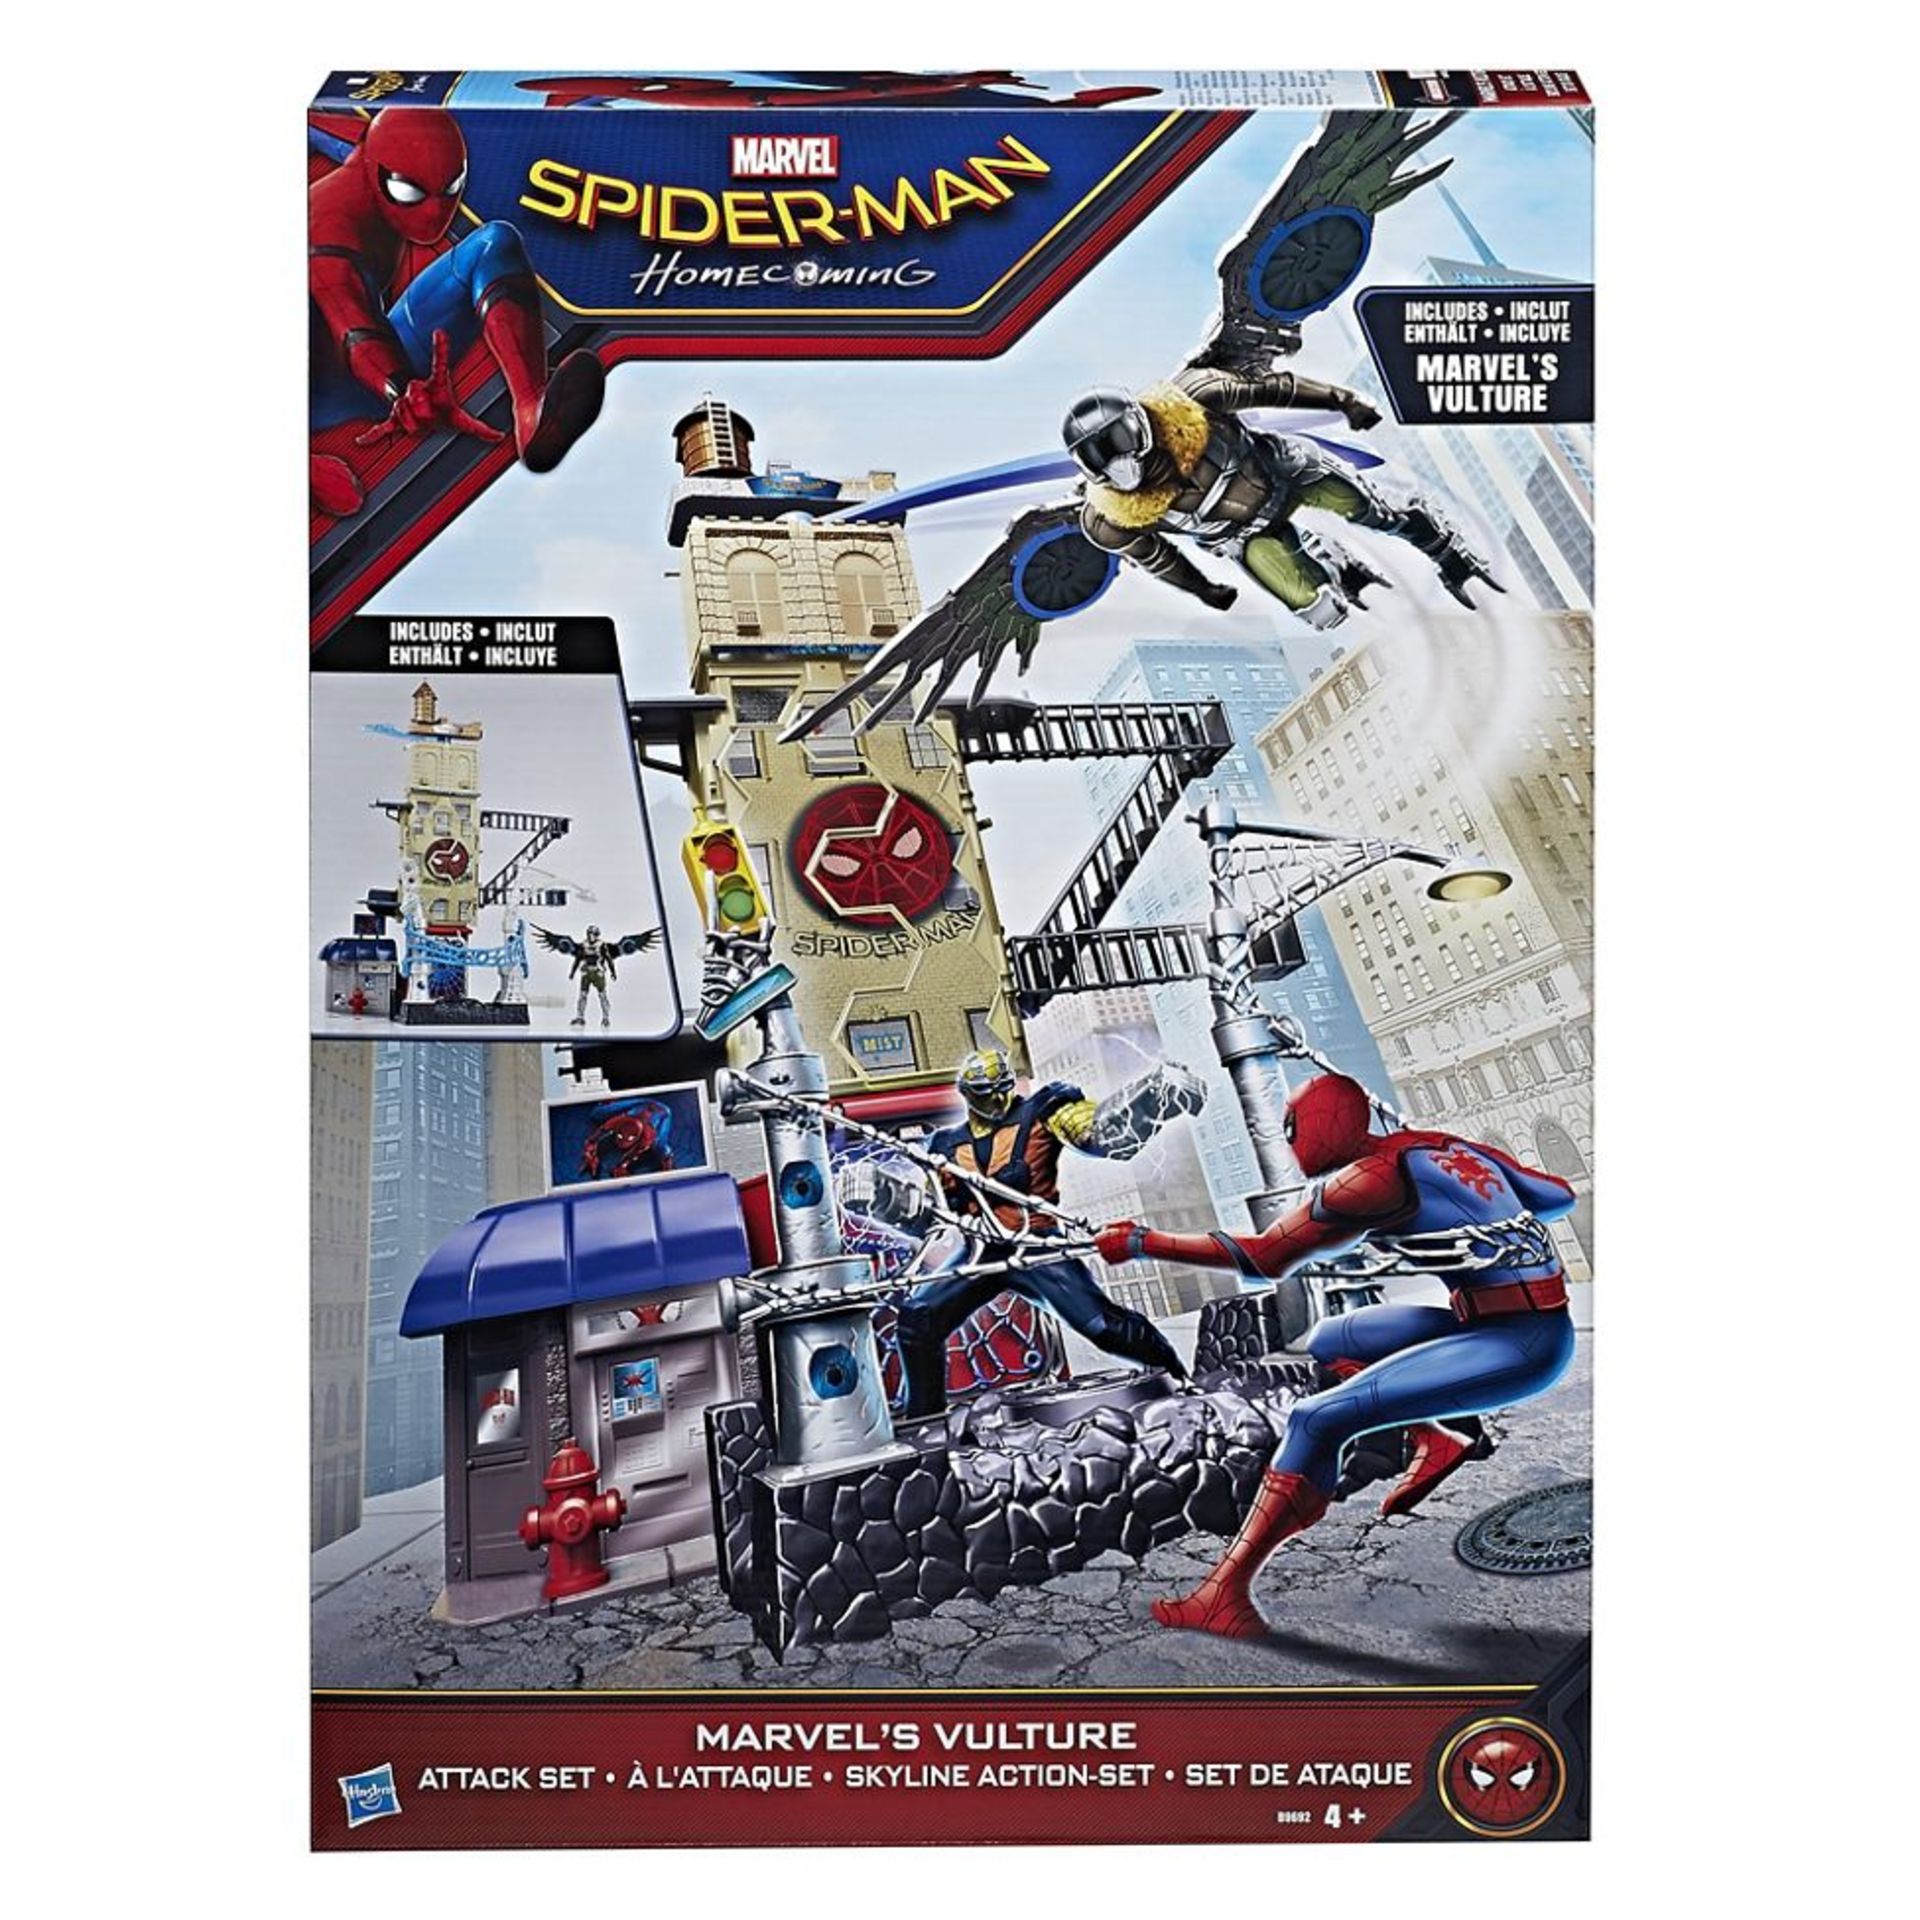 V Brand New Spiderman Home Coming Marvels Vulture Attack Playset - Debenhams Price £32.50 - Ebay